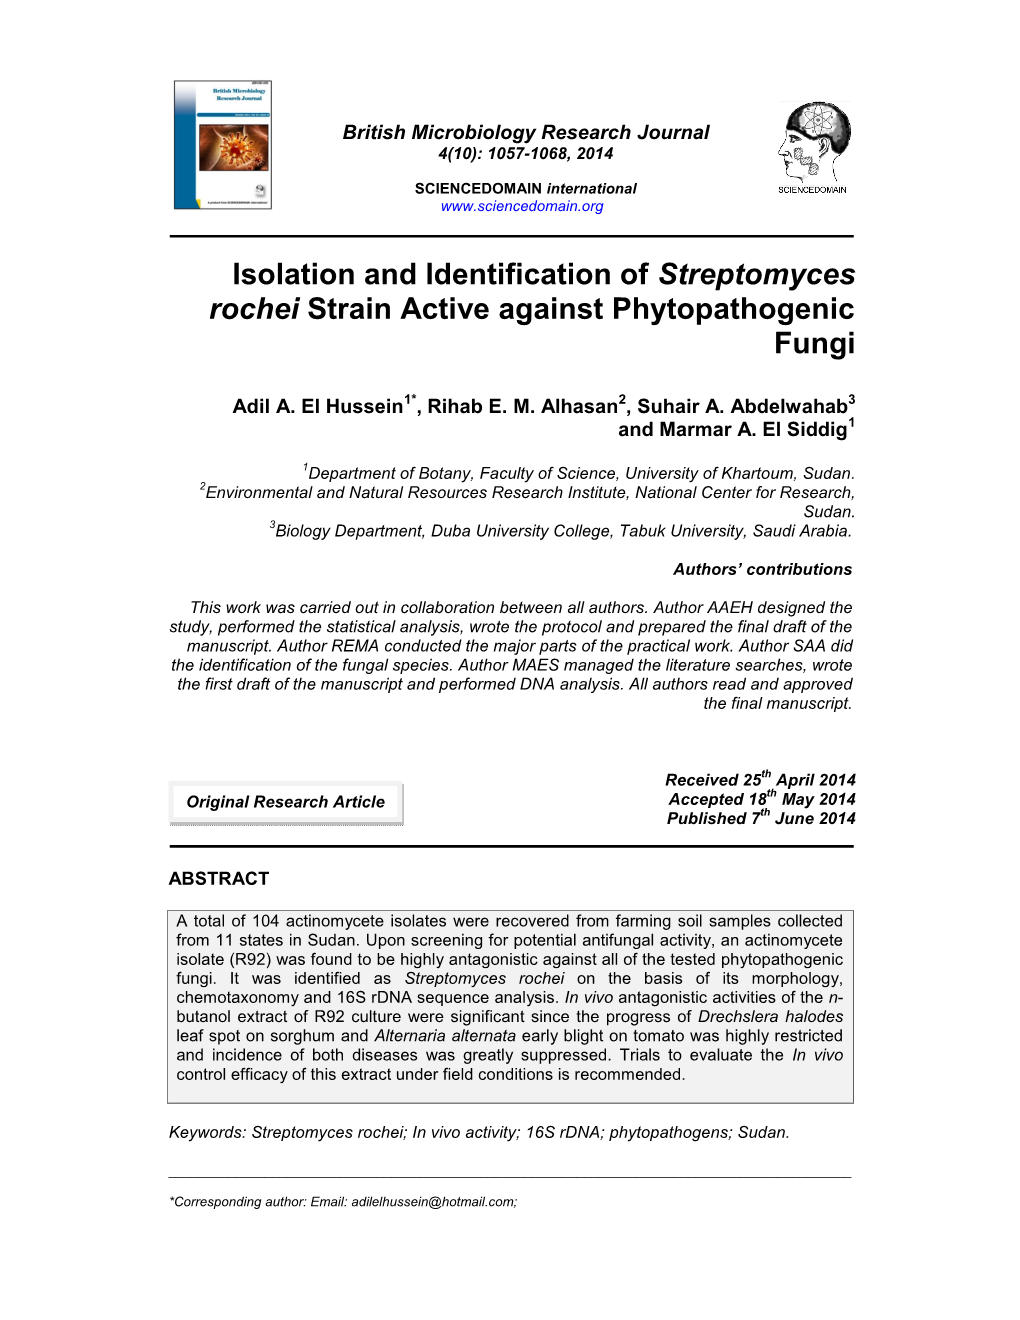 Isolation and Identification of Streptomyces Rochei Strain Active Against Phytopathogenic Fungi